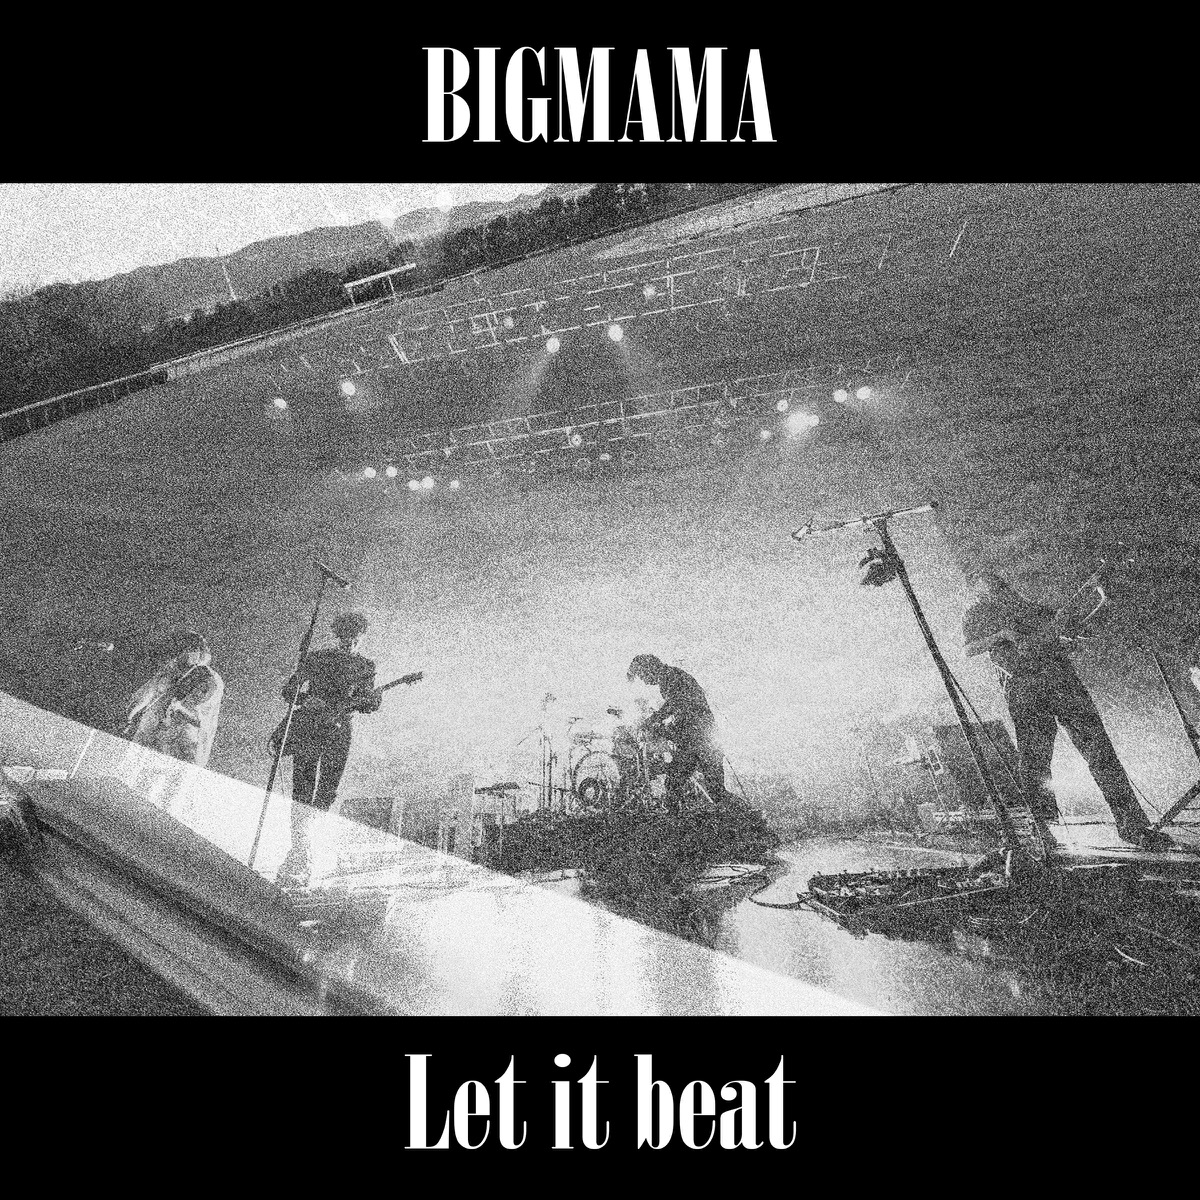 『BIGMAMA - Let it beat』収録の『Let it beat』ジャケット